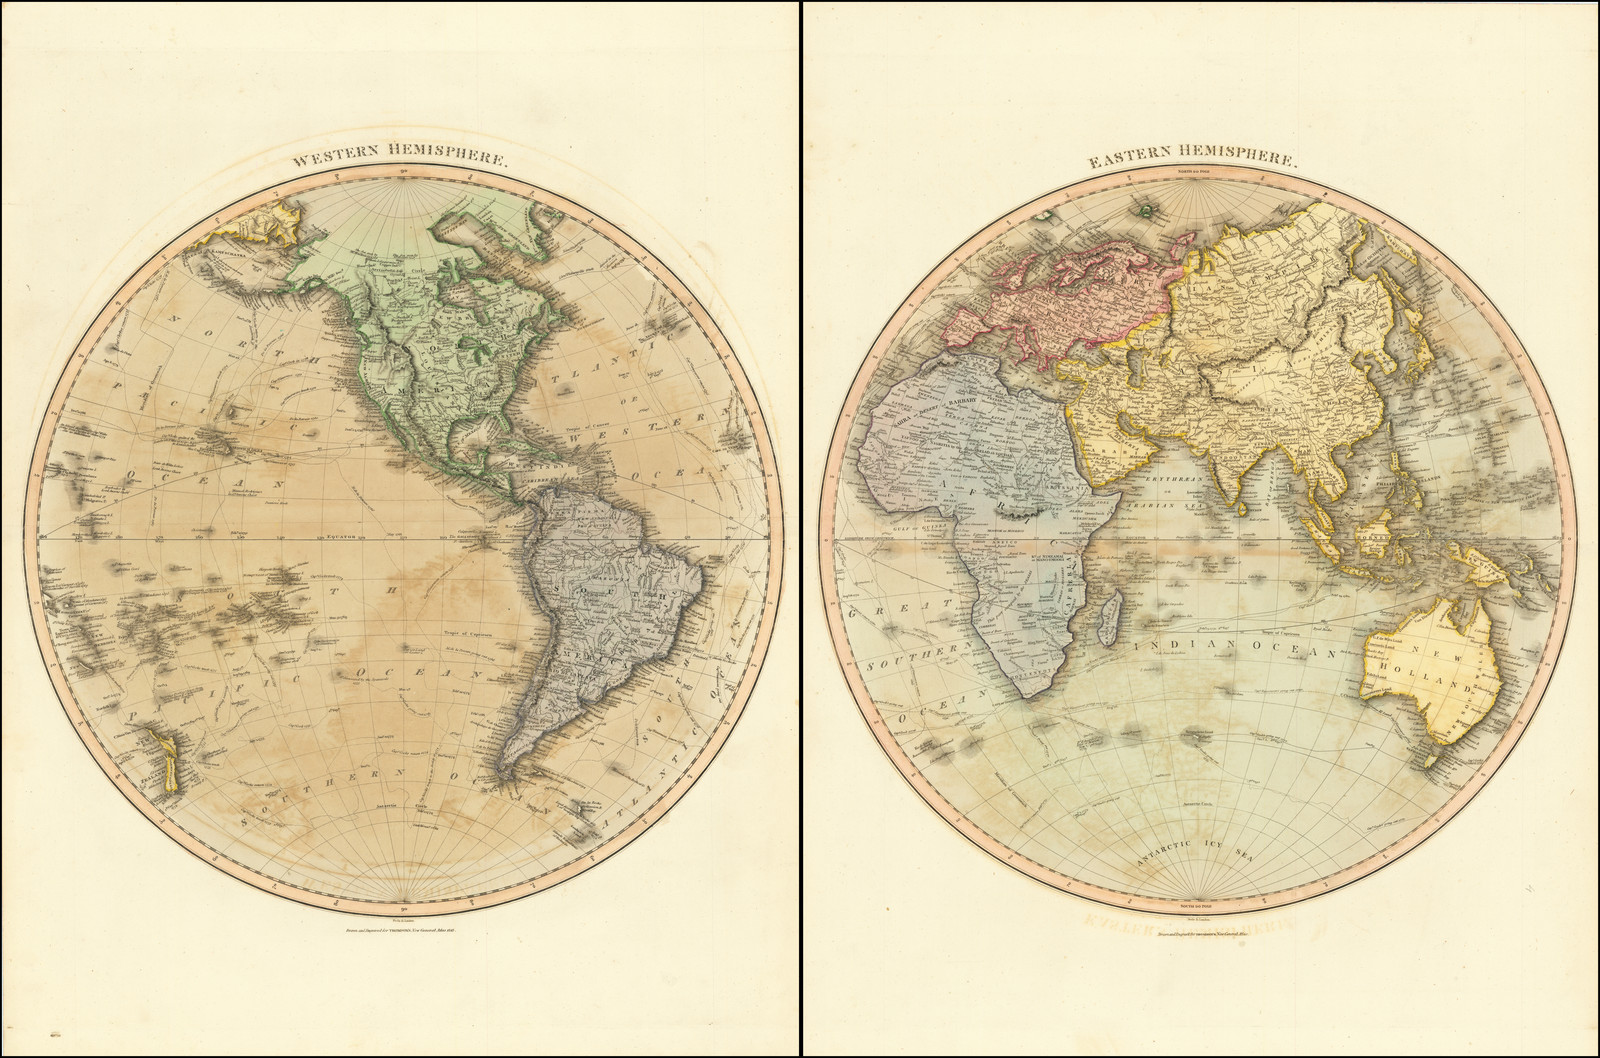 eastern hemisphere map labeled